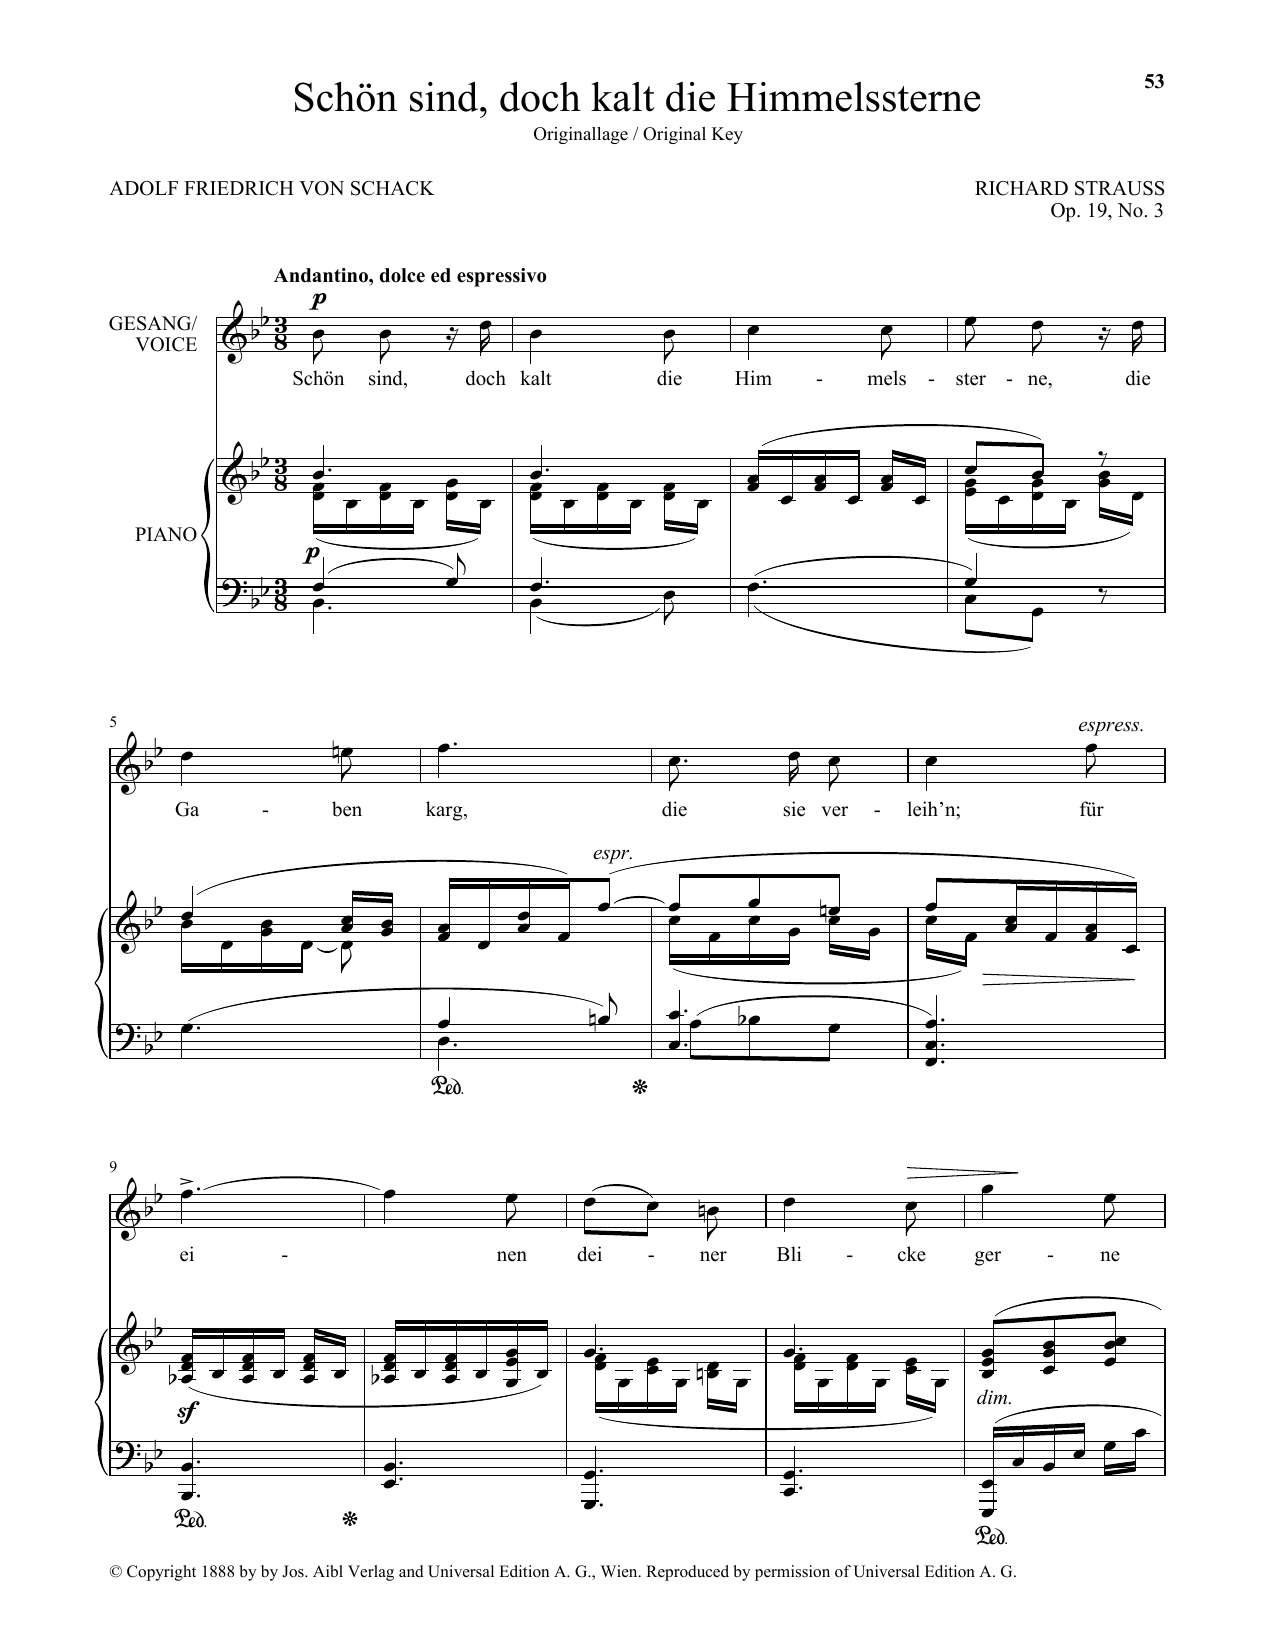 Richard Strauss Schon Sind, Doch Kalt Die Himmelssterne (High Voice) Sheet Music Notes & Chords for Piano & Vocal - Download or Print PDF